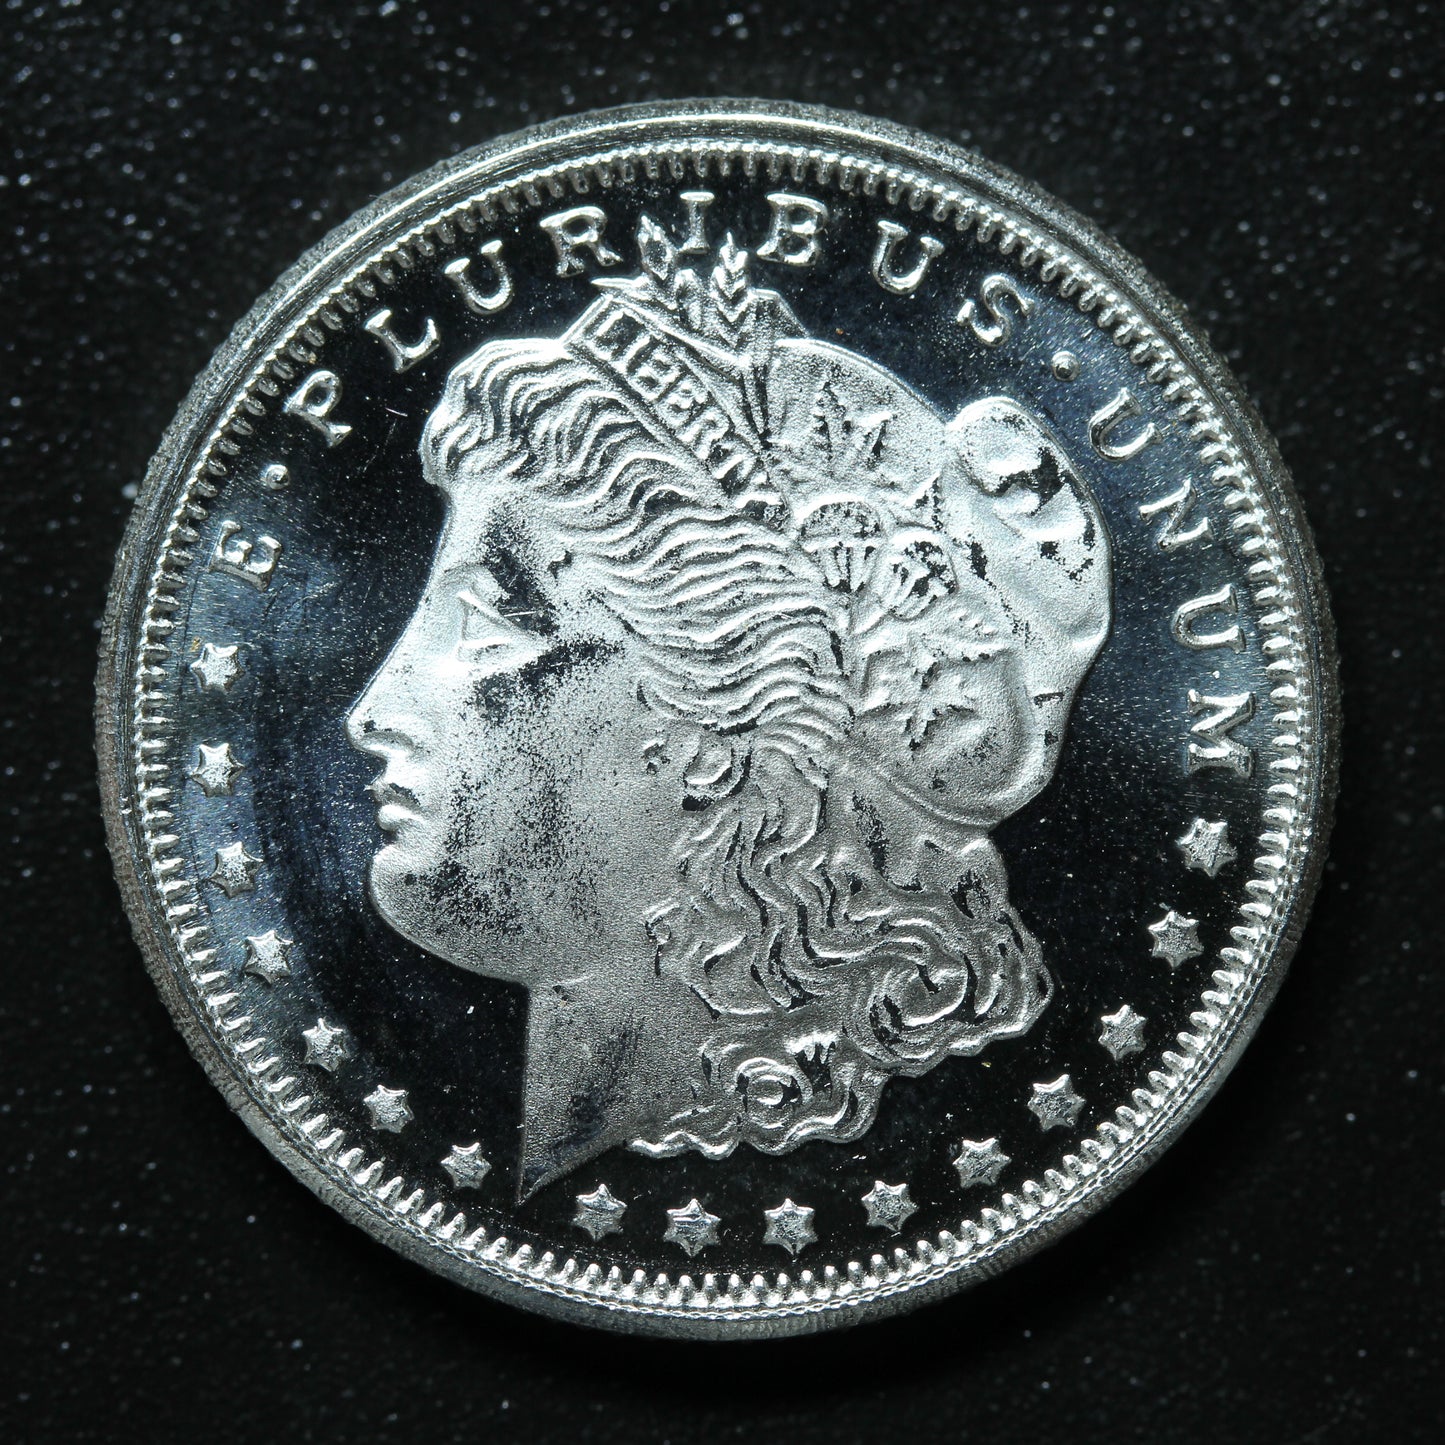 1/4 oz .999 Silver Round - Morgan Design